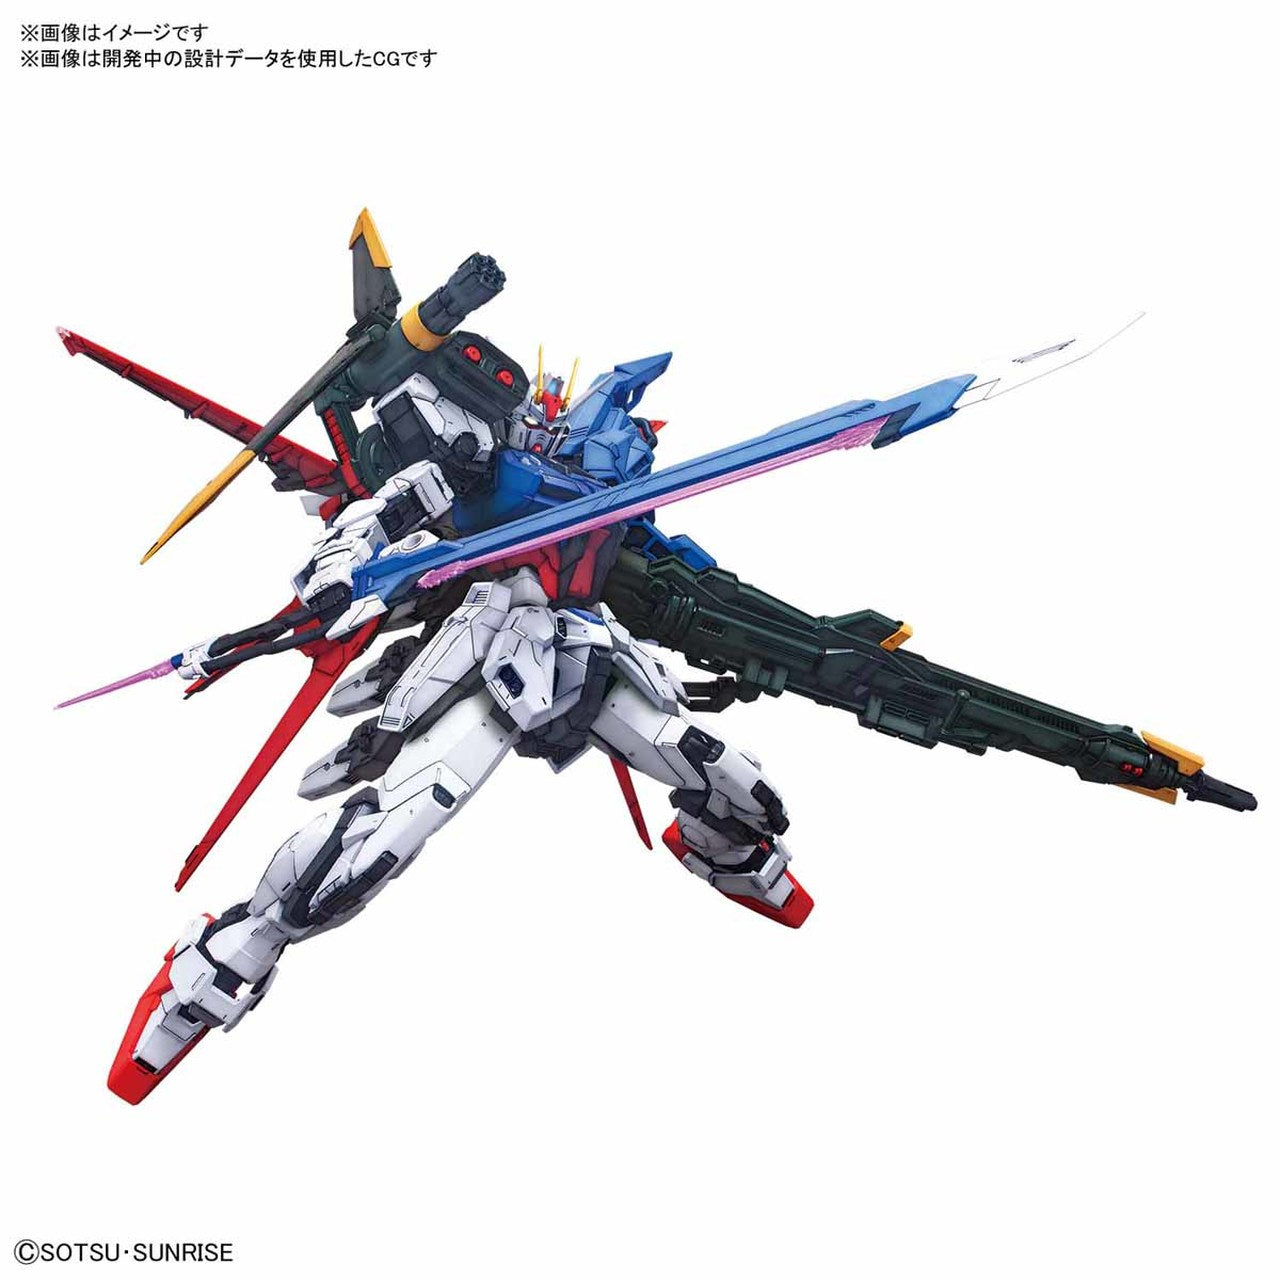 PG - GAT-X105 Perfect Strike Gundam